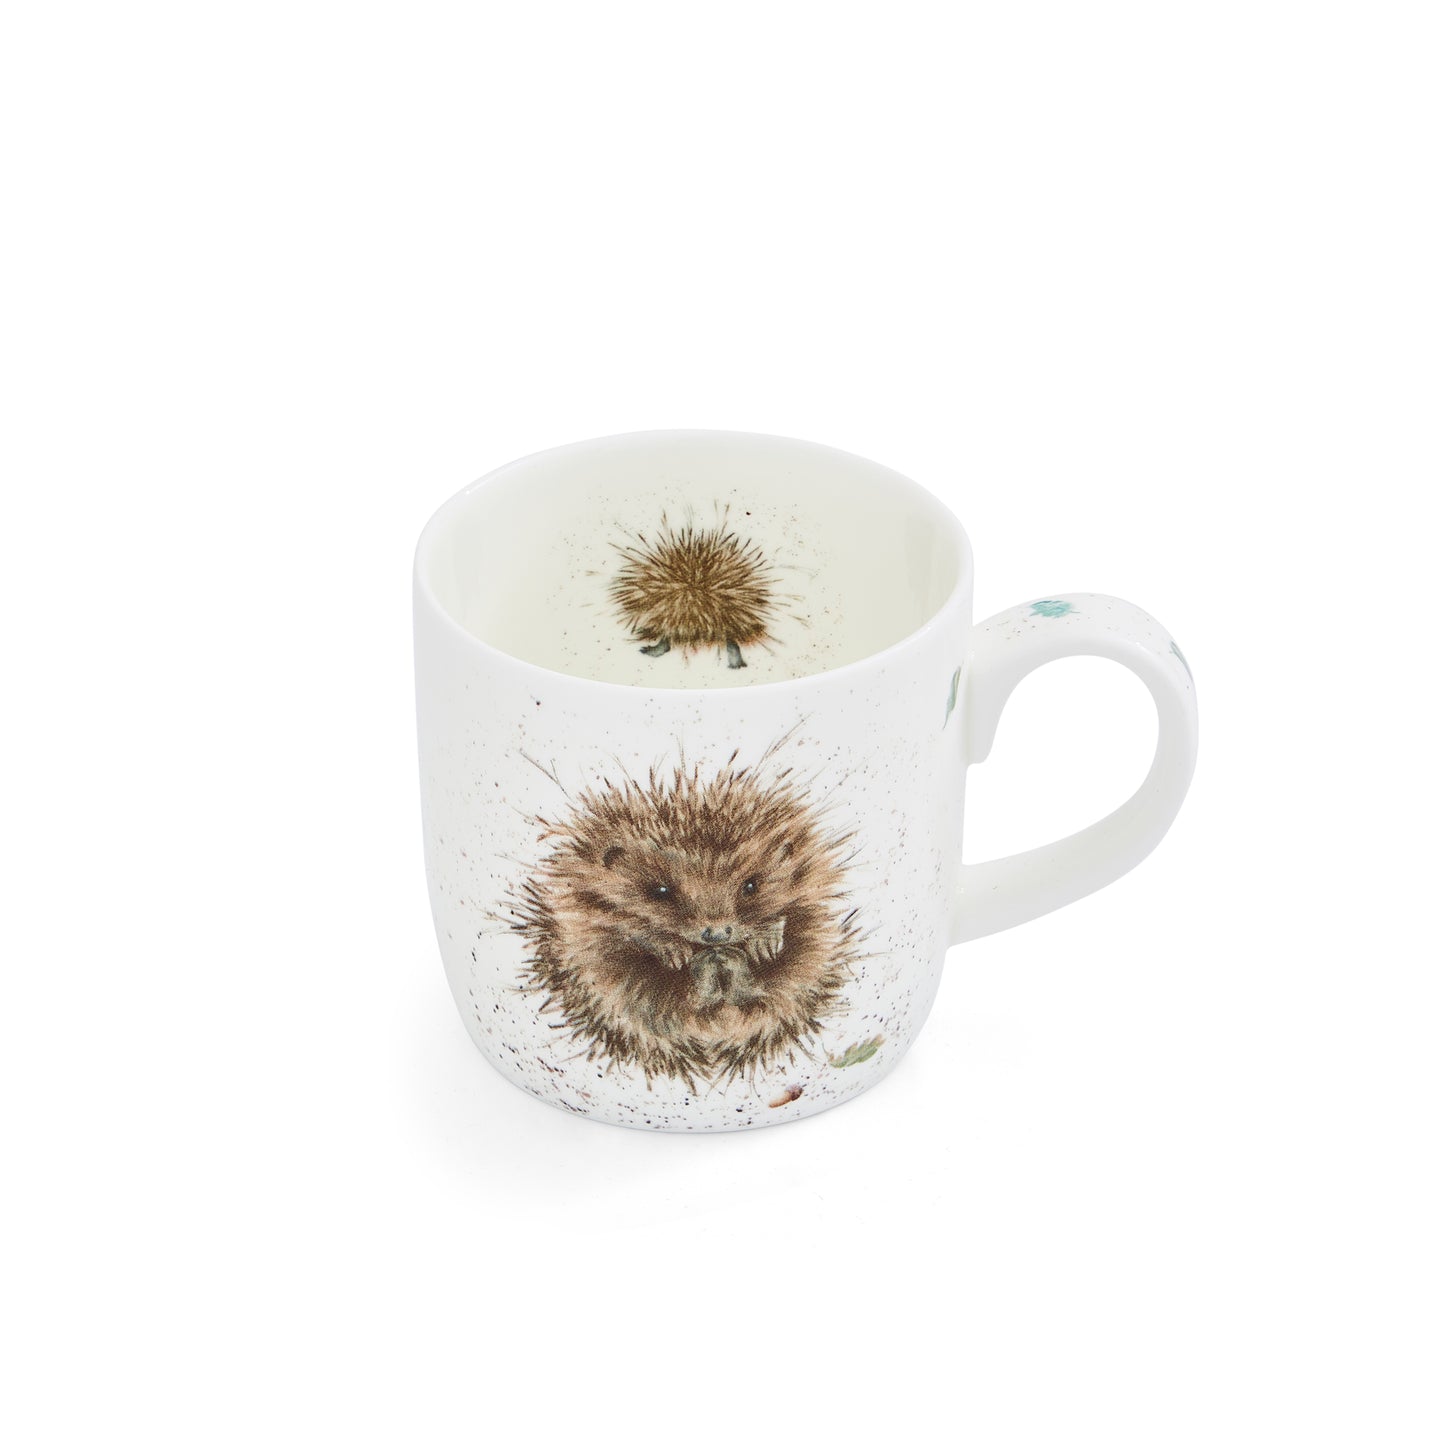 Royal Worcester Wrendale Designs Awakening Hedgehog Fine Bone China Mug - Set of 6